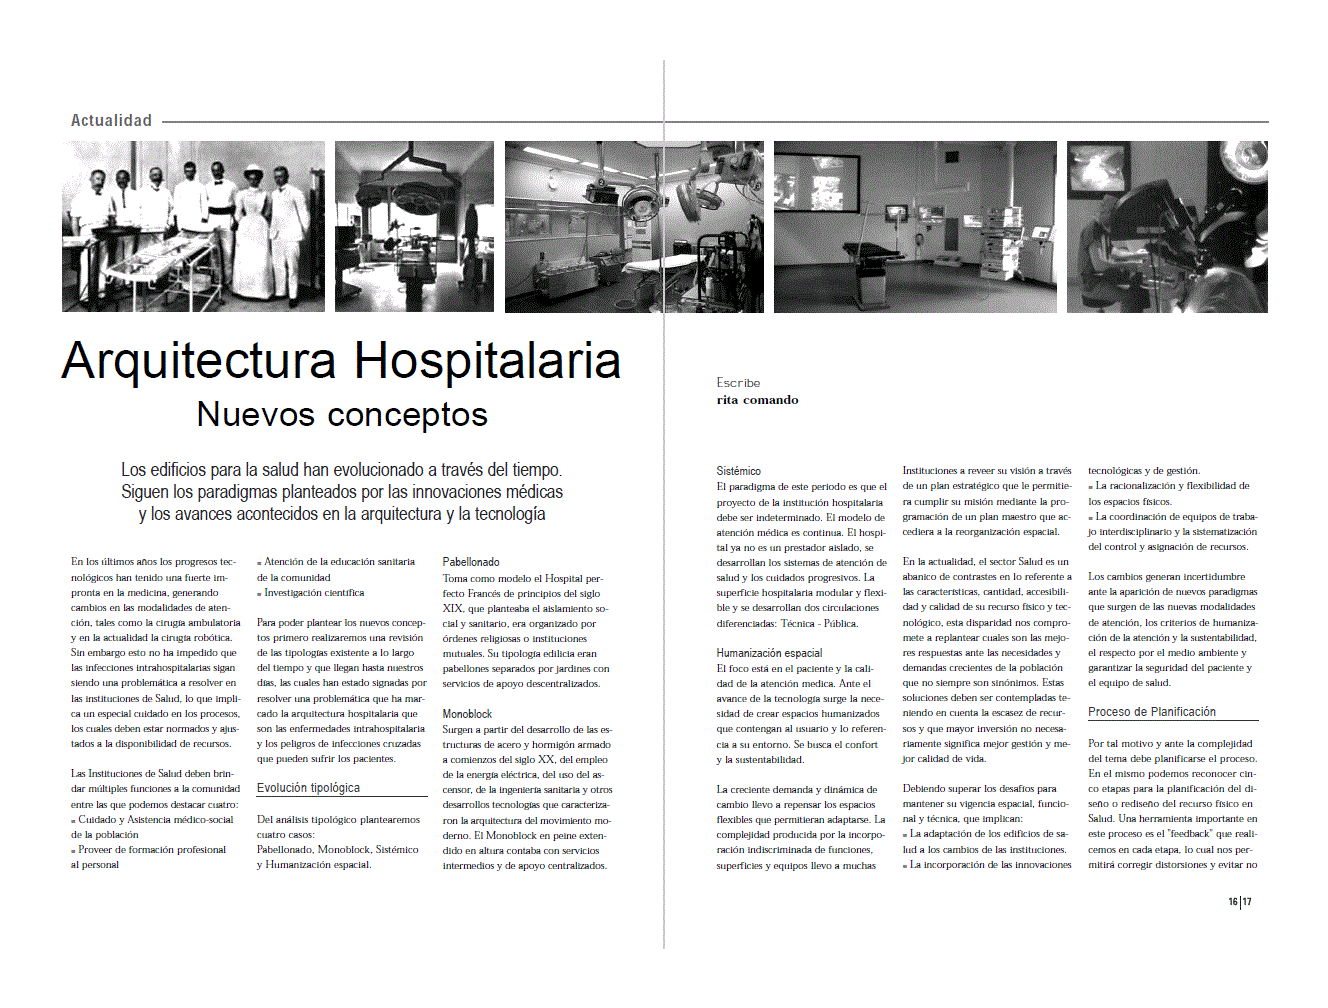 Modern hospitals